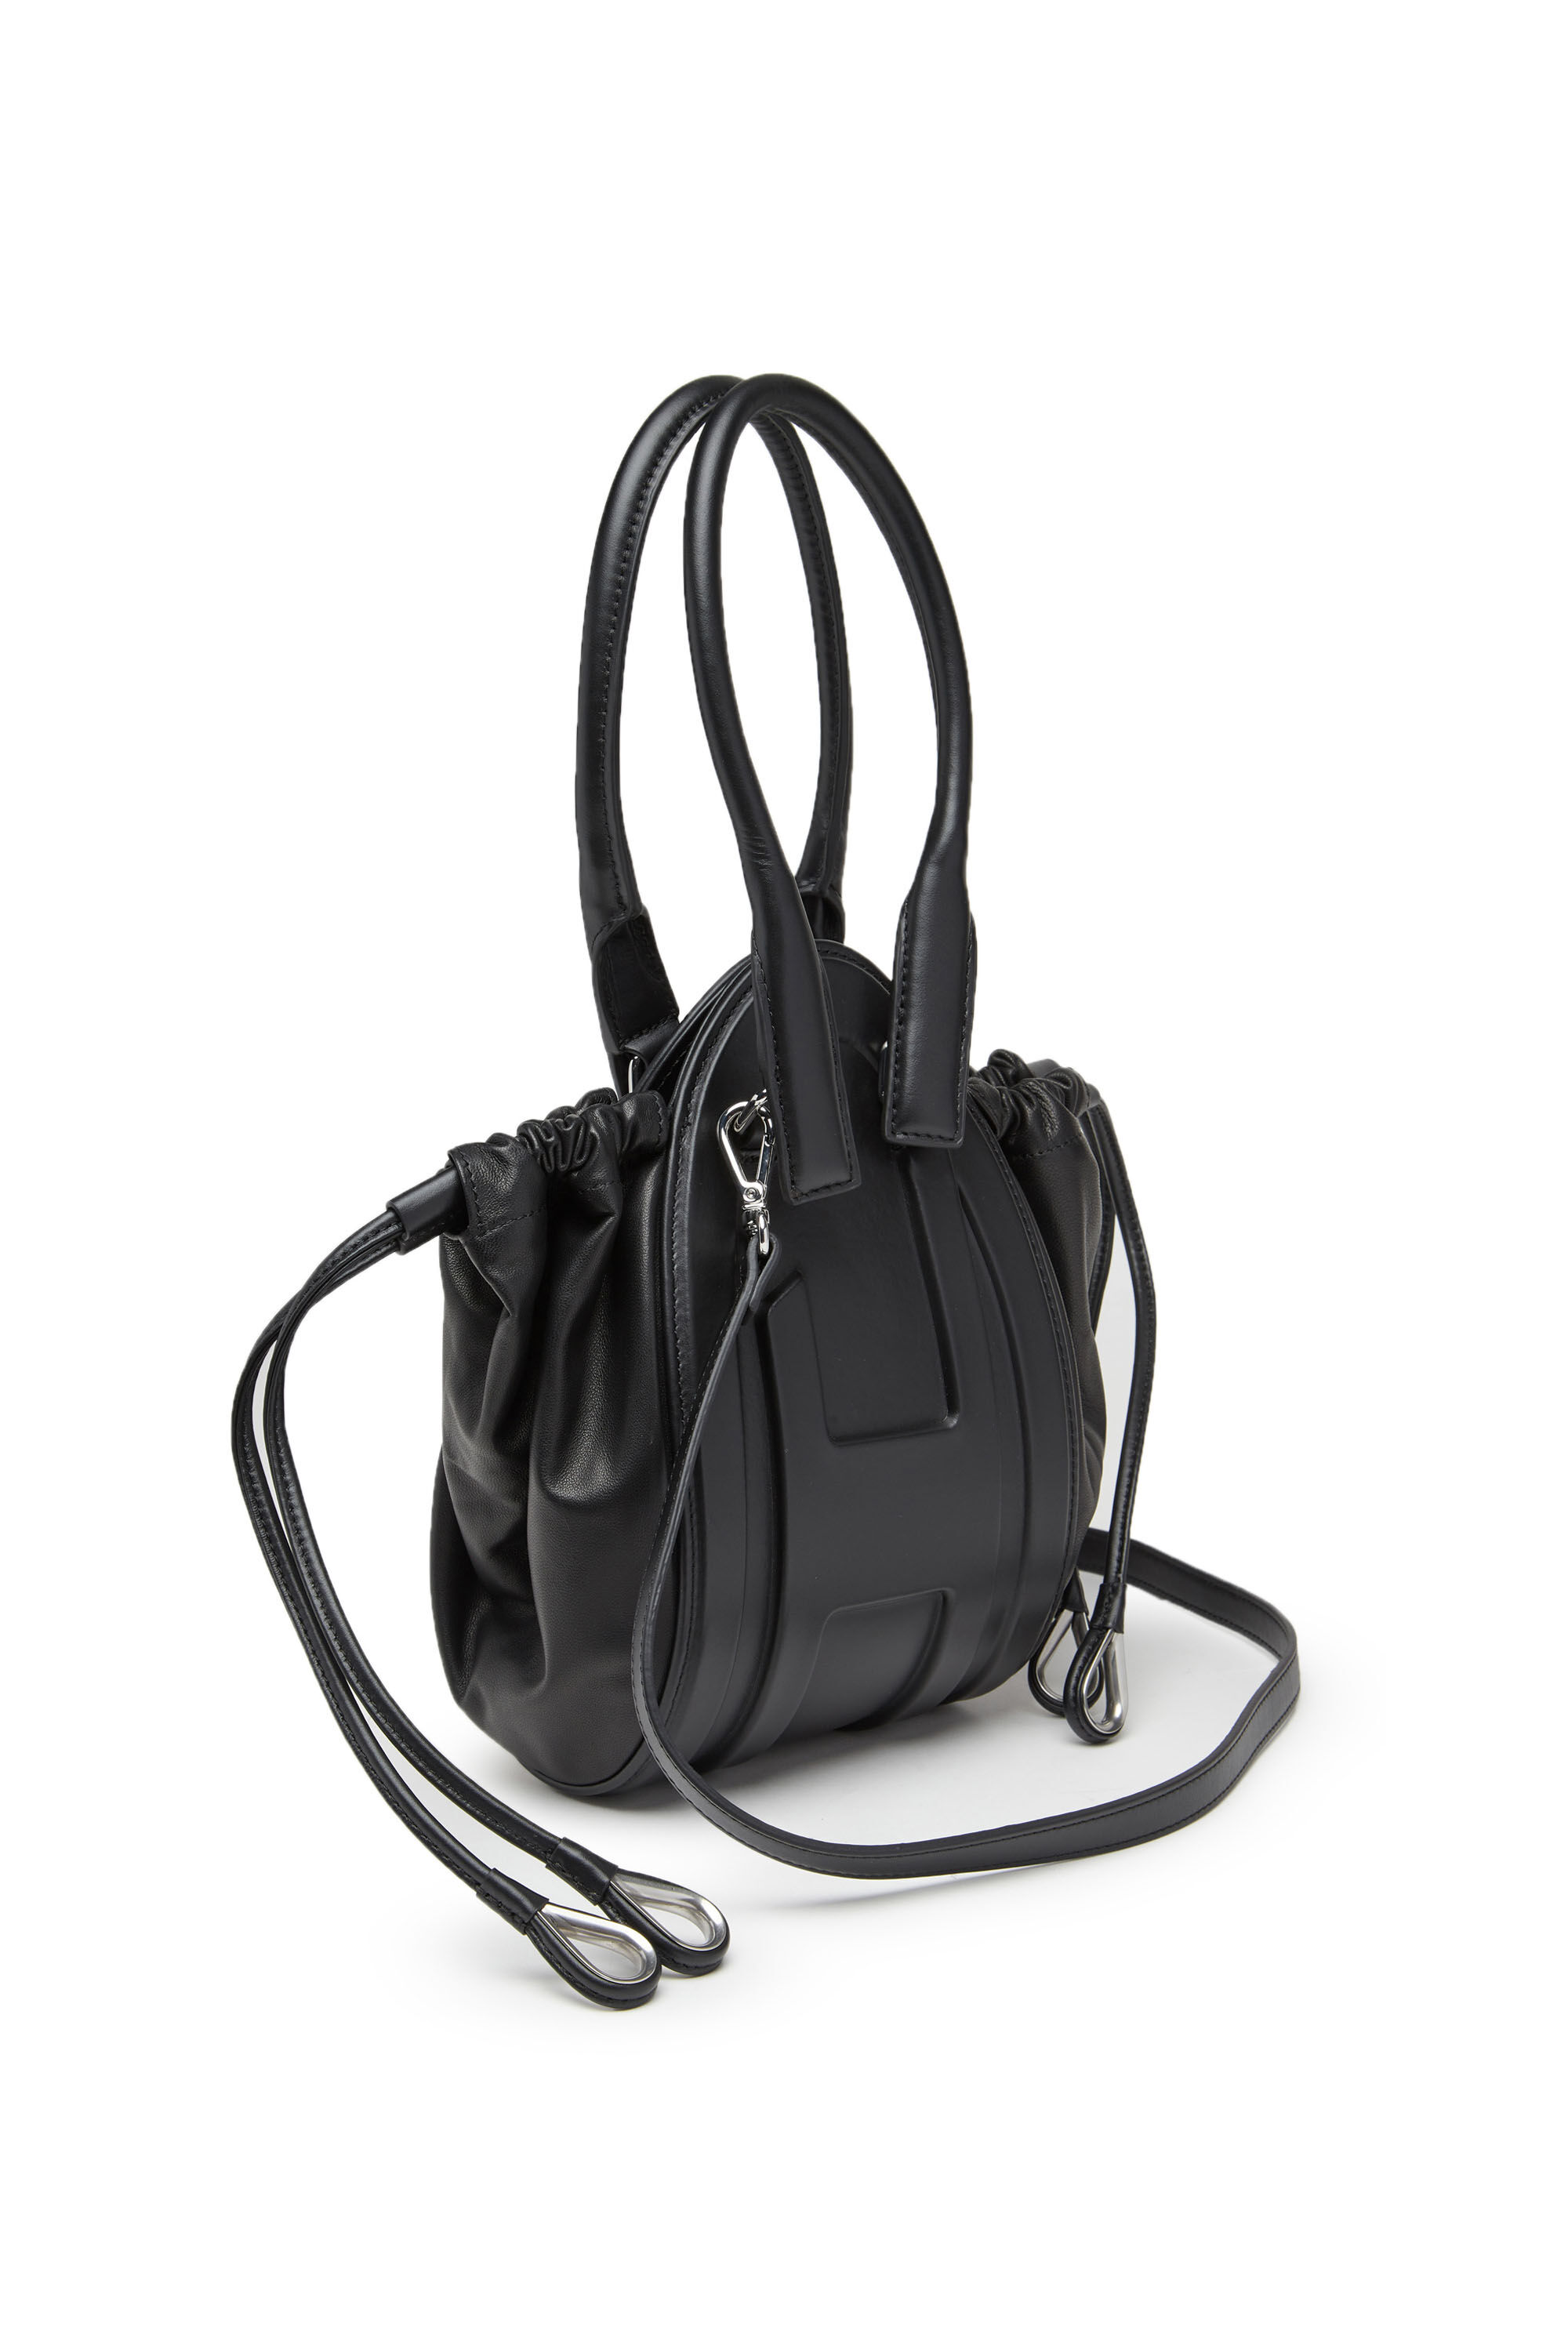 Diesel - 1DR-FOLD XS, Woman 1DR-Fold XS-Oval logo handbag in nappa leather in Black - Image 2